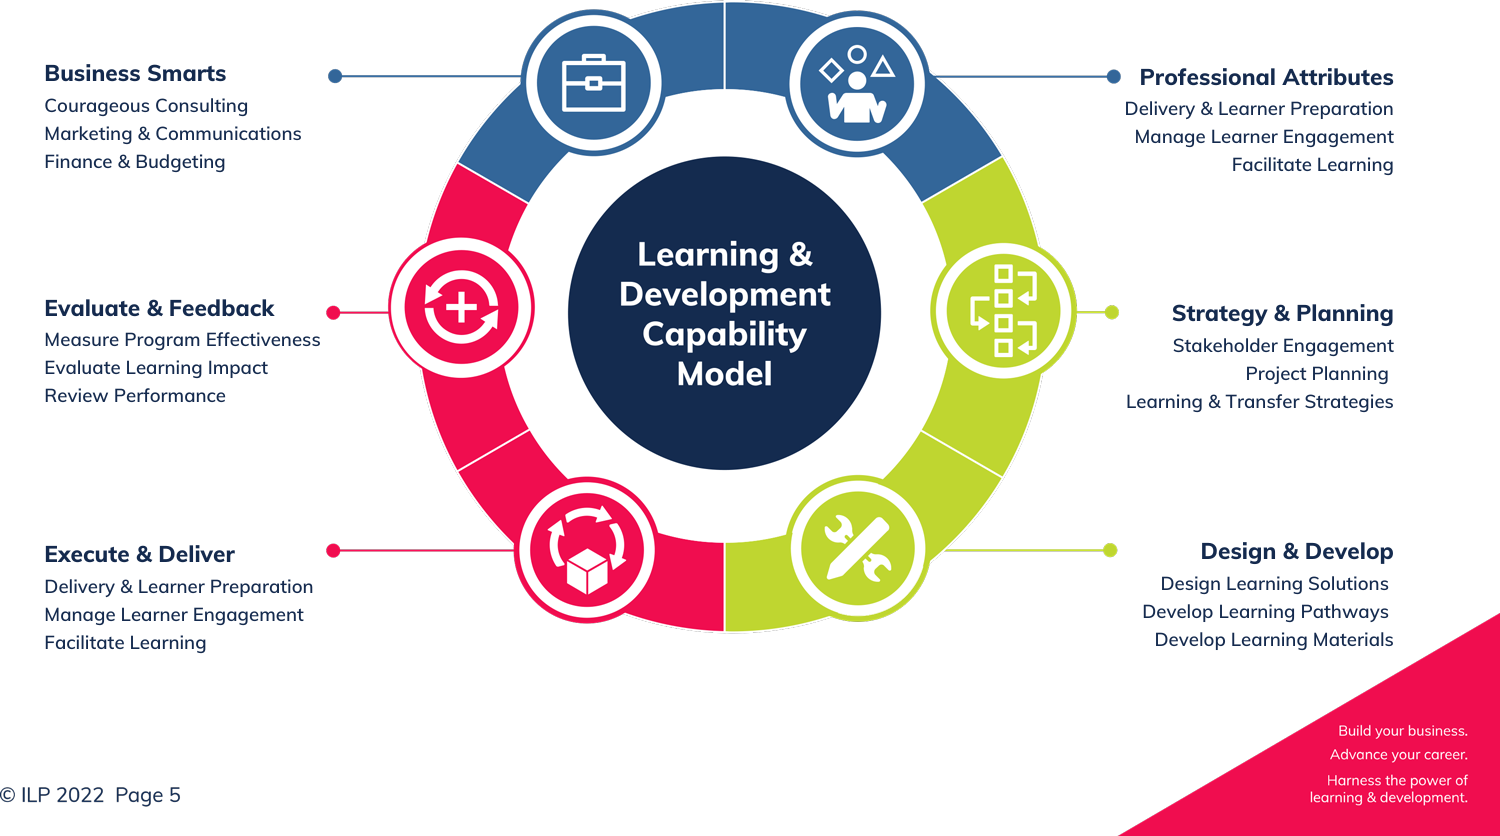 Learning & Development Capability Model